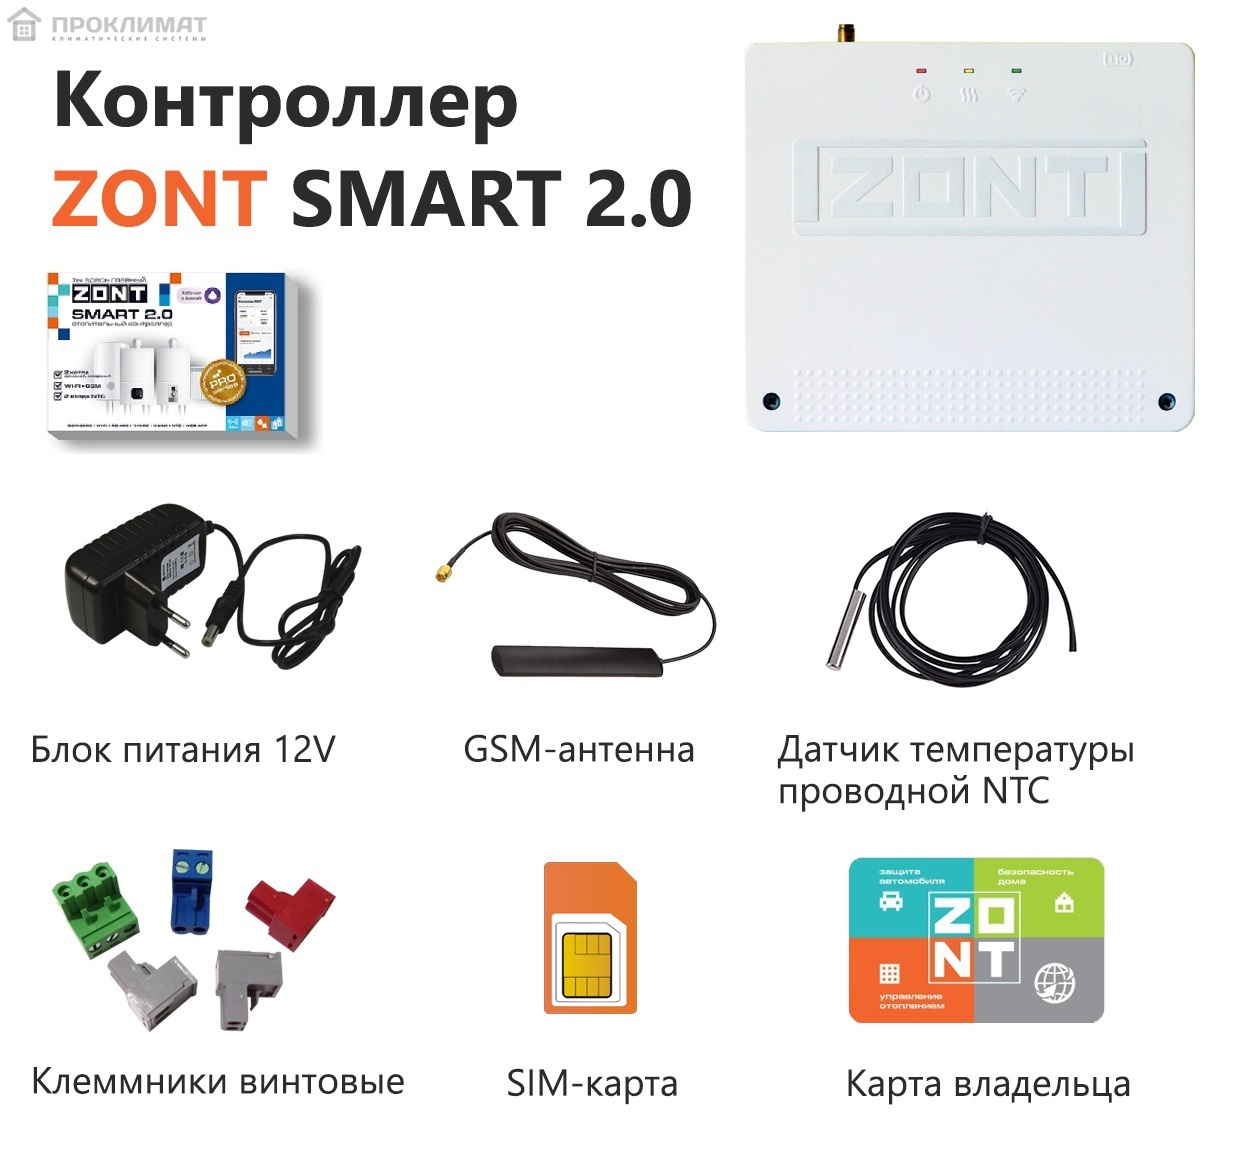 Zont hotel. Zont Smart 2.0. Отопительный термостат Zont Smart New. Контроллер Zont Smart 2.0. Zont Smart 2.0 разъемы.